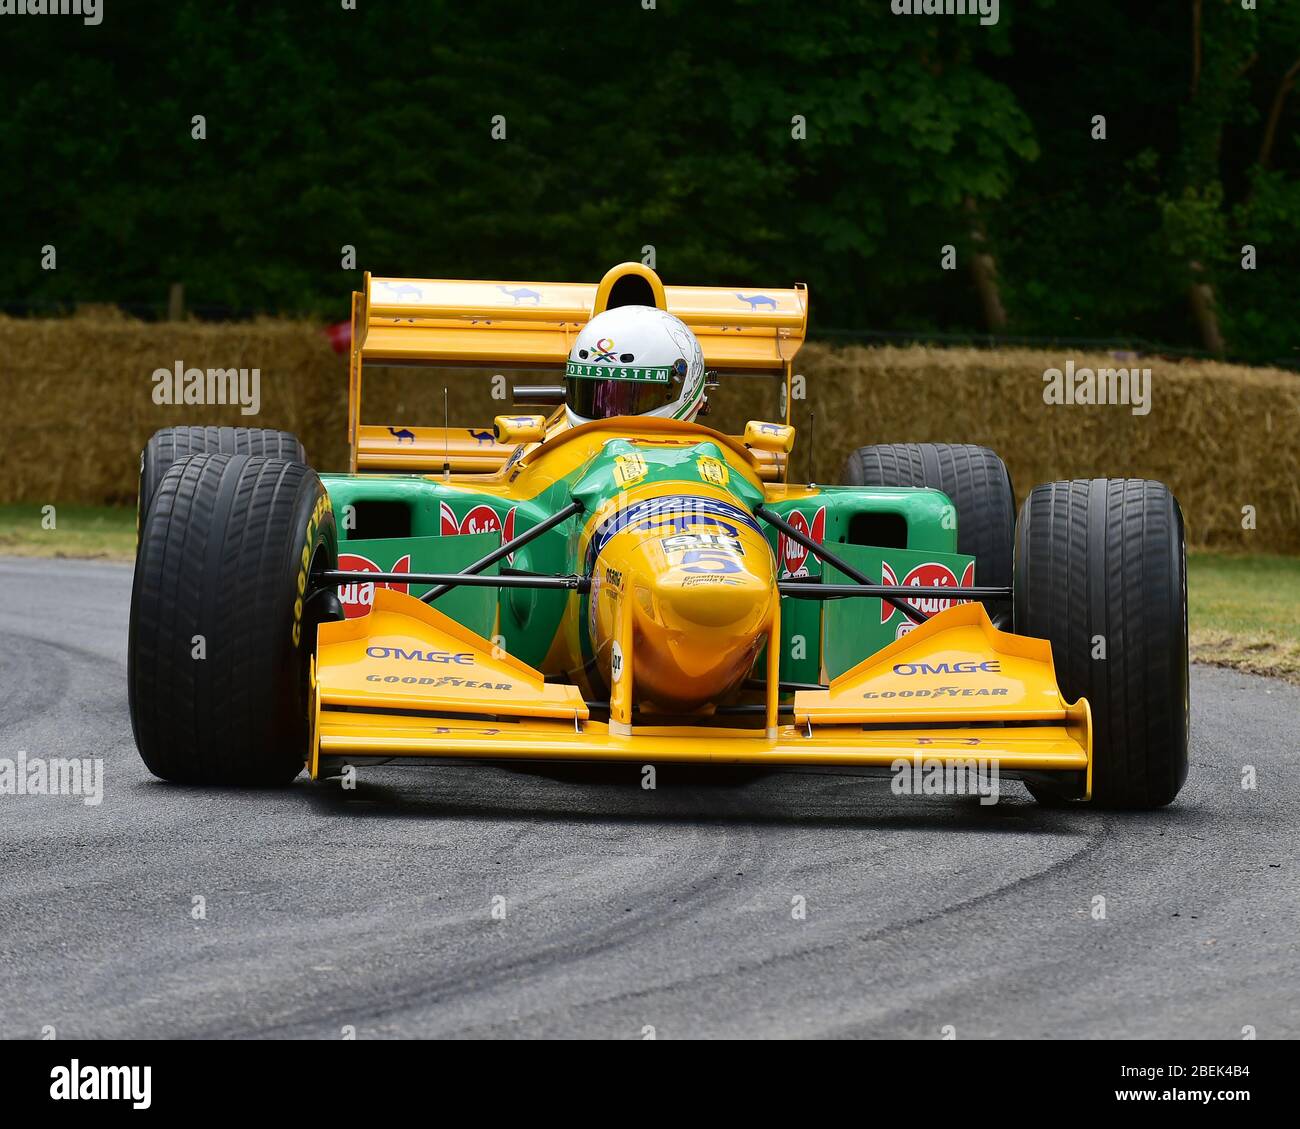 Stephen Ottavianelli, Benetton-Ford B193, Goodwood Festival of Speed, 2017, Peaks of Performance, Motorsports Game Changers, automobili, automobili, entrare Foto Stock